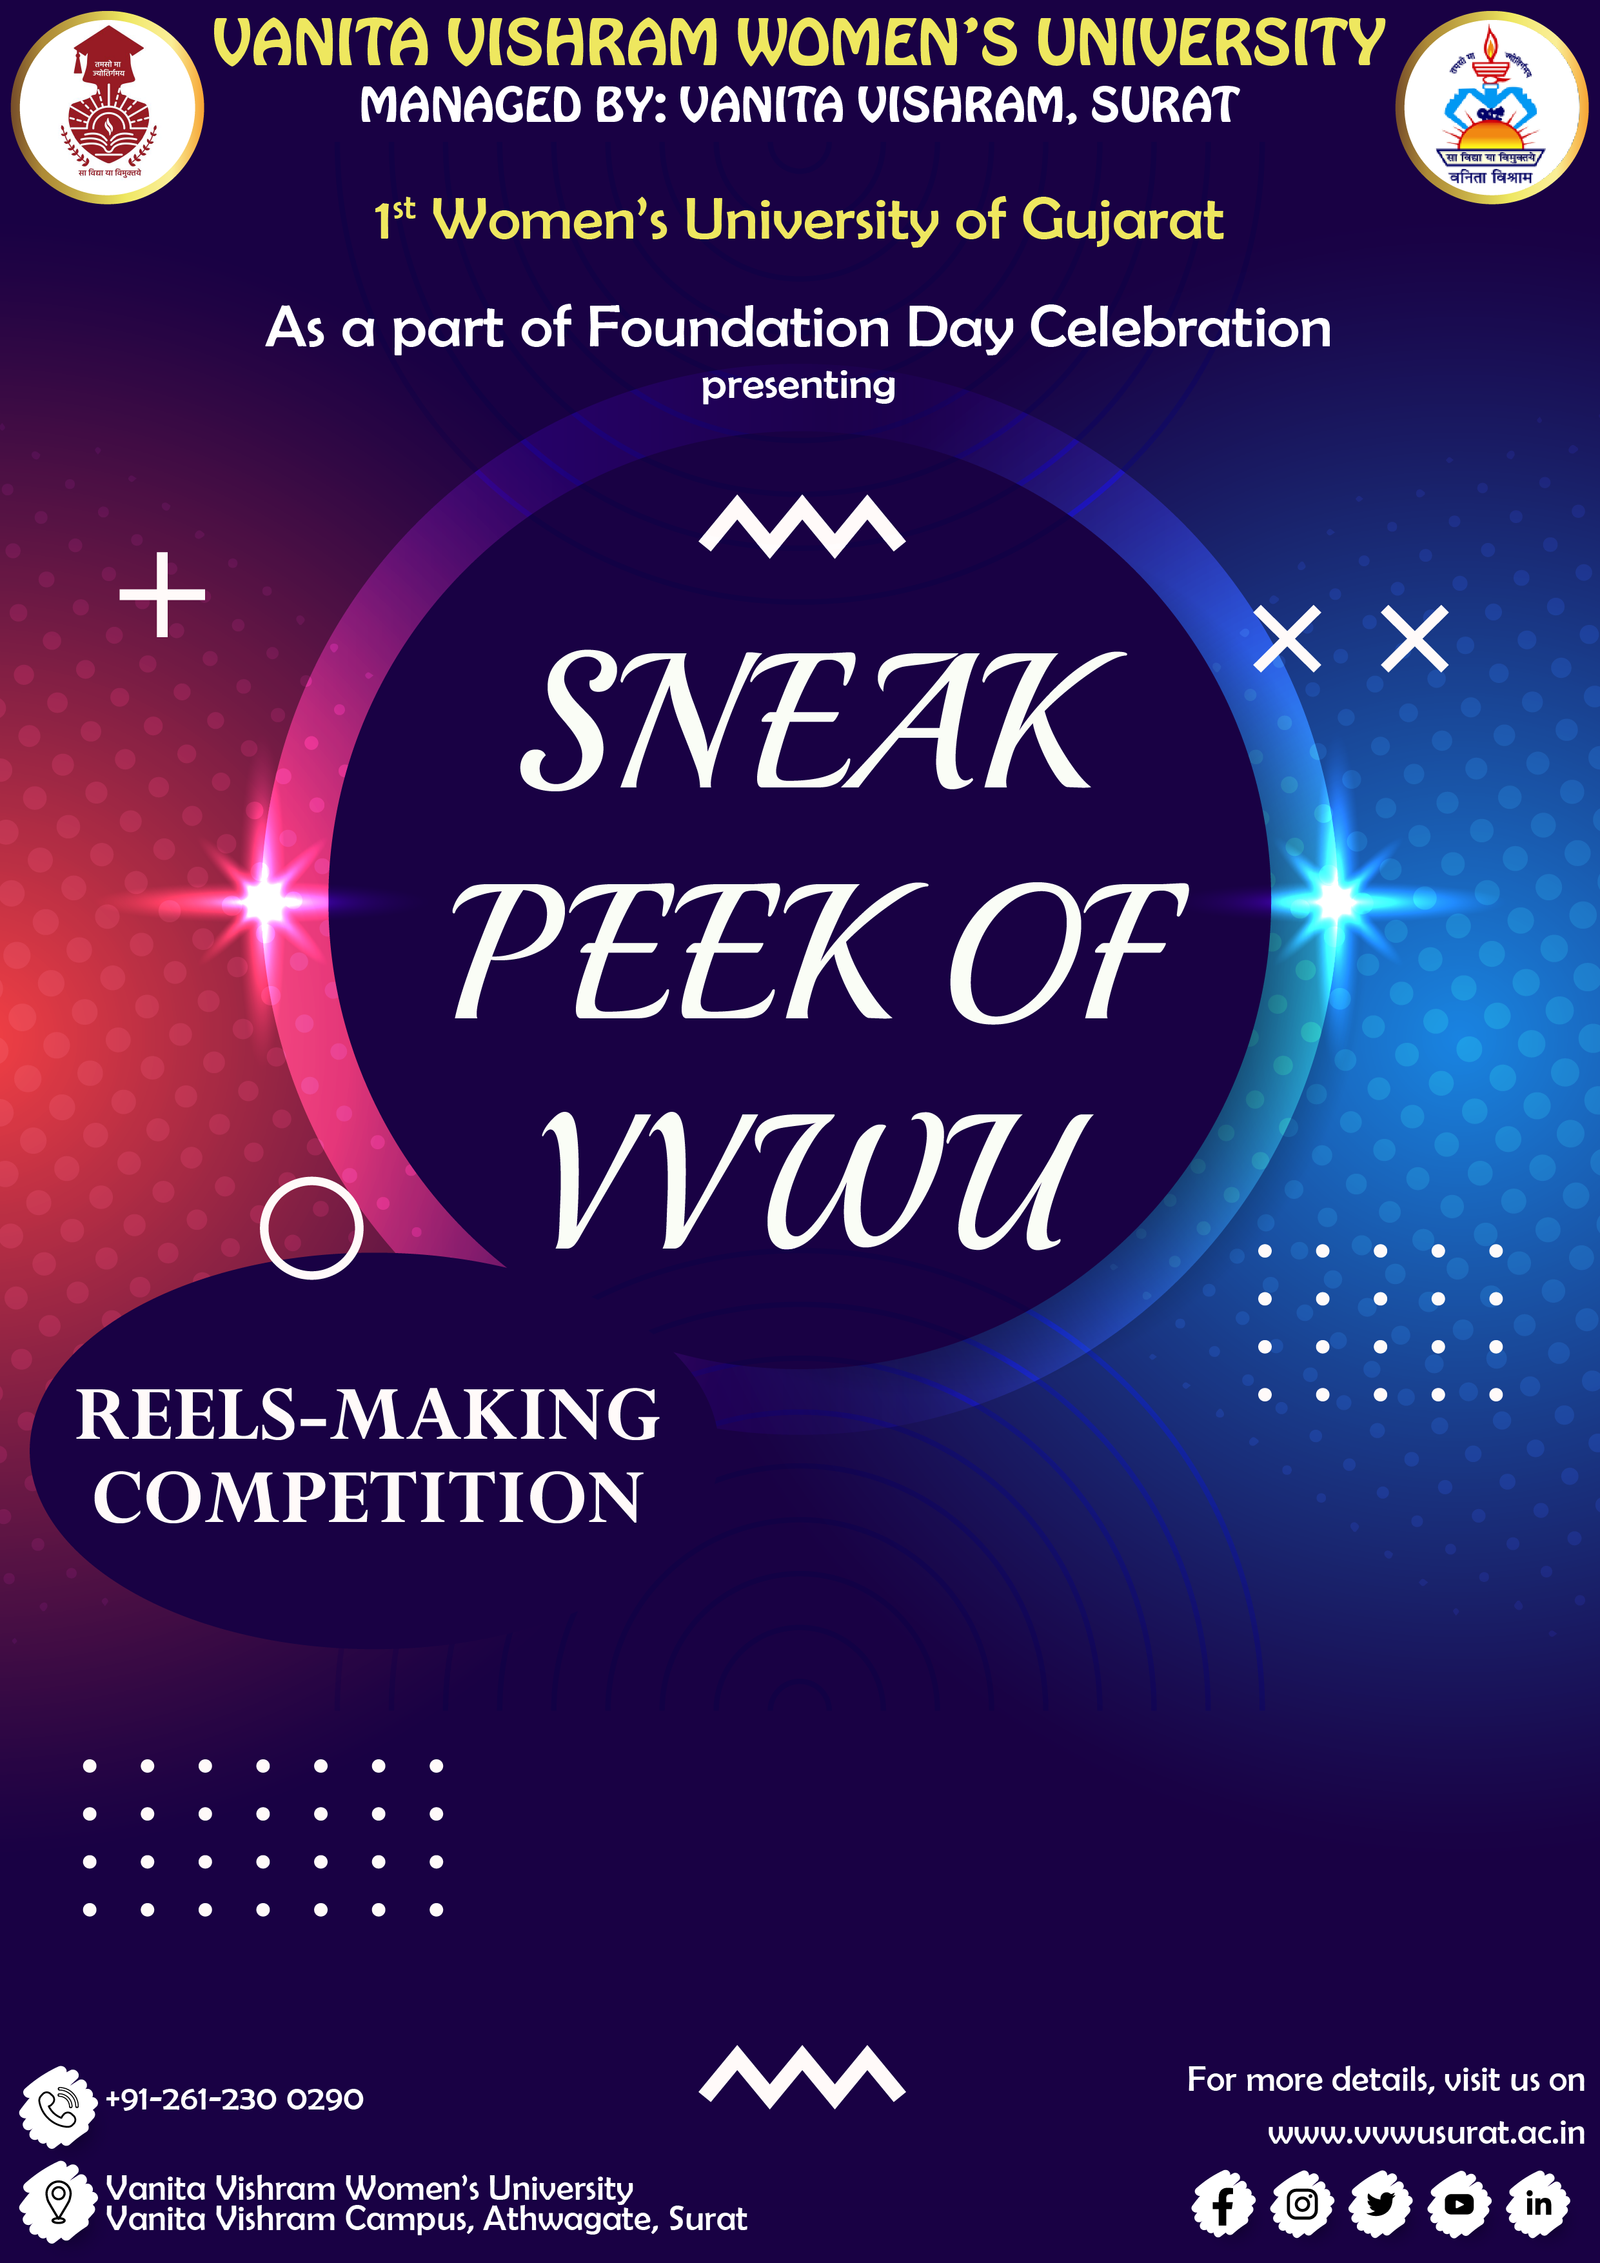 SNEAK PEEK OF VVWU (REELS-MAKING COMPETITION)